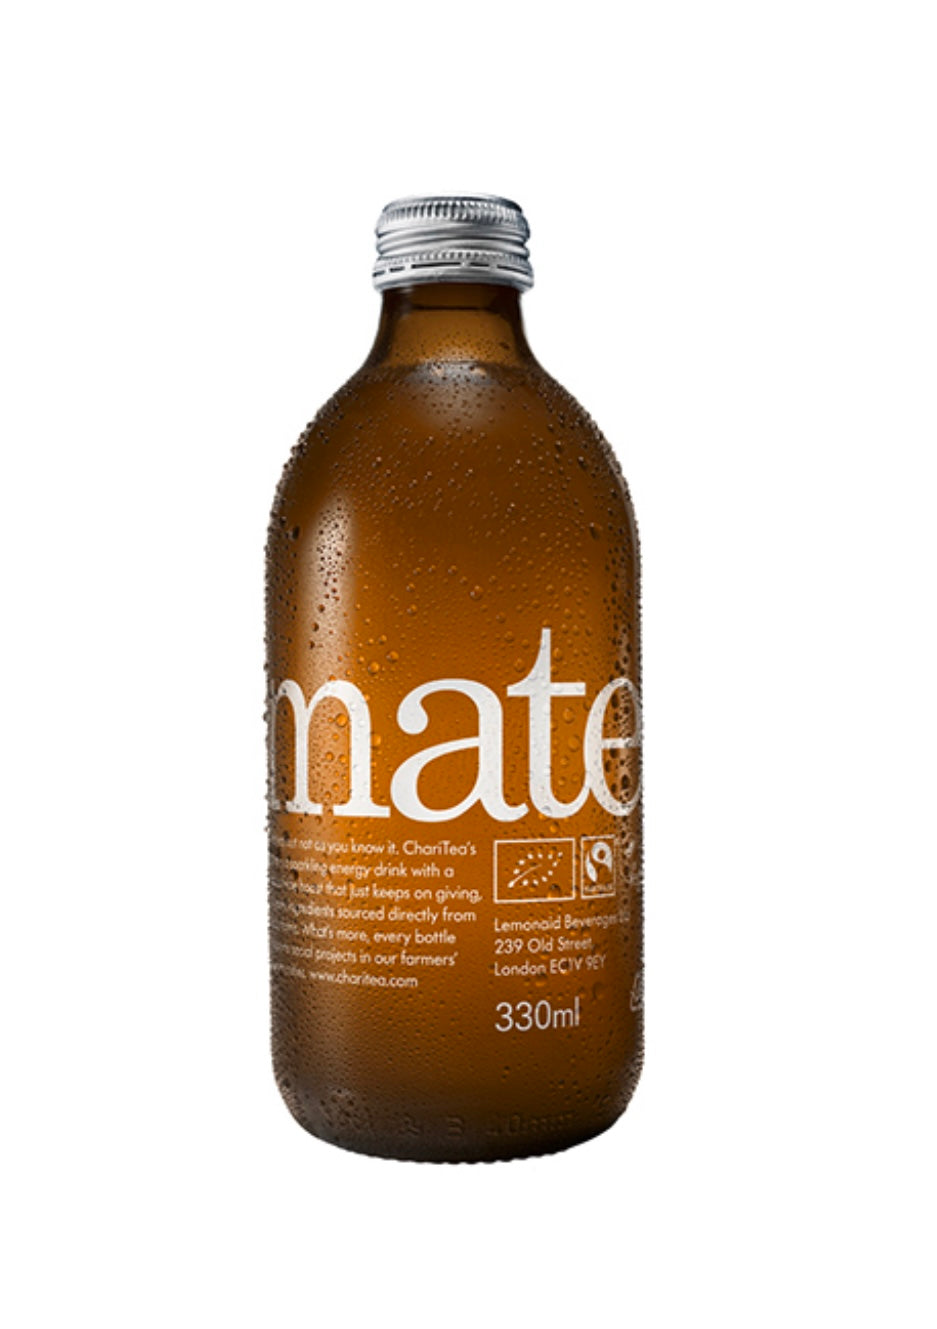 ChariTea Mate 330ml <br> Mate Tea and Black Tea with Orange and Lemon - and a Natural Caffeine Boost